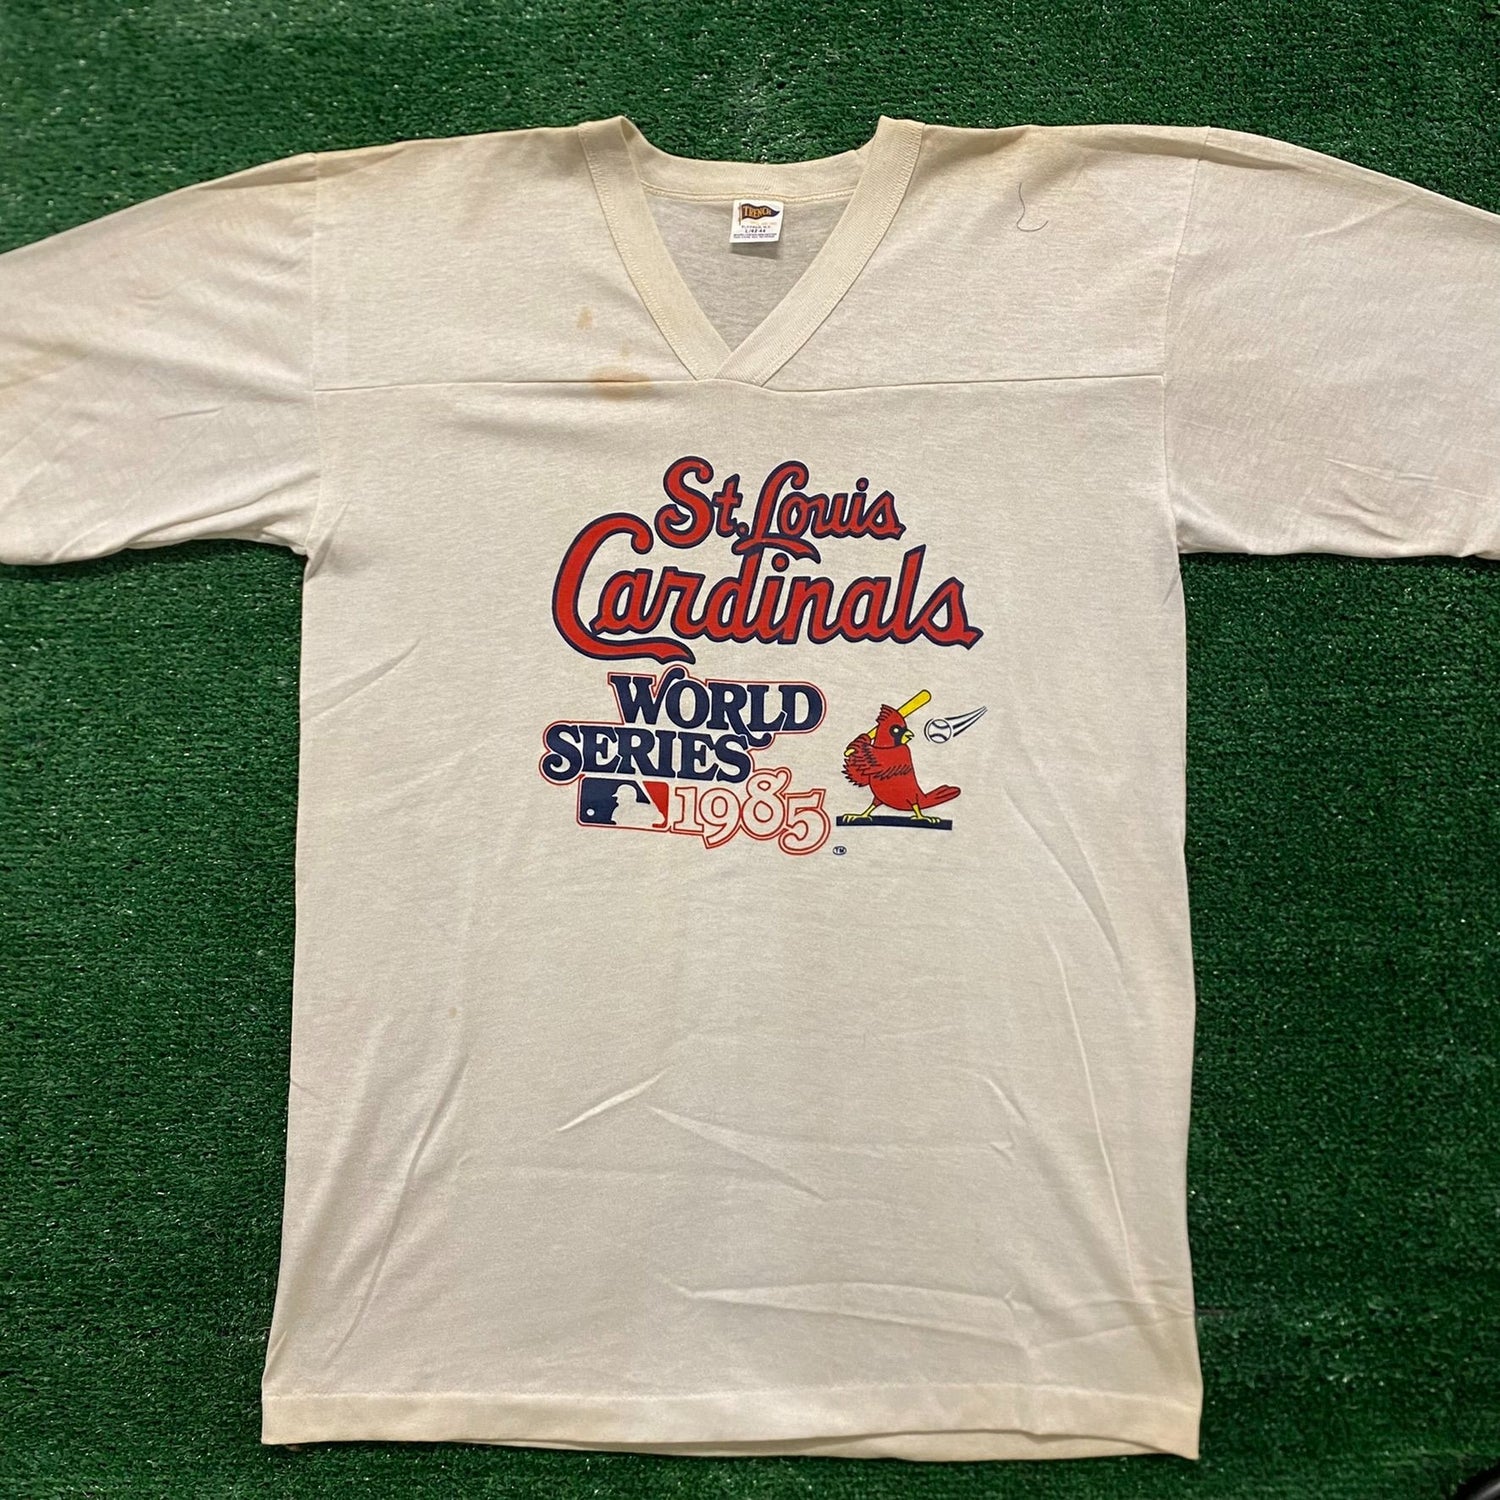 Vintage 1985 St. Louis Cardinals World Series Shirt Size 